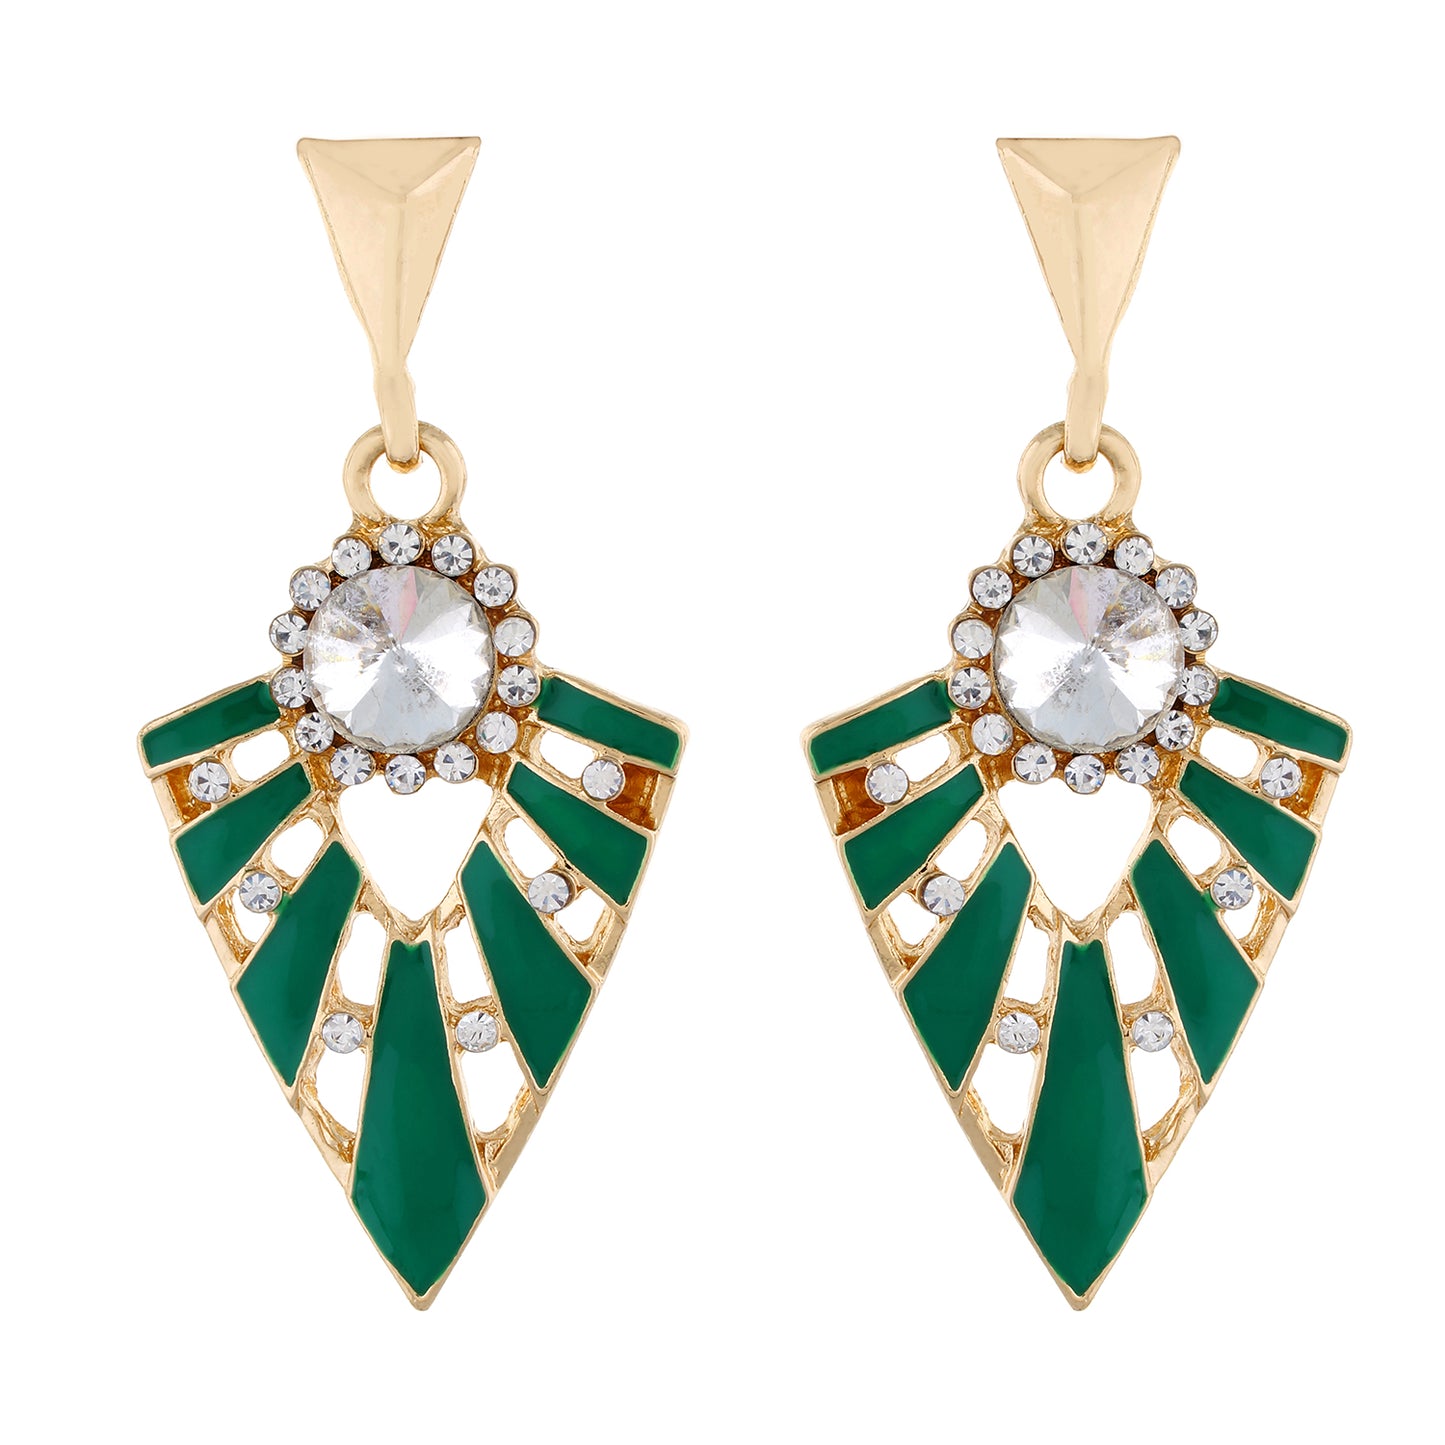 Green colour Triangular Design Hanging Earrings for Girls and Women